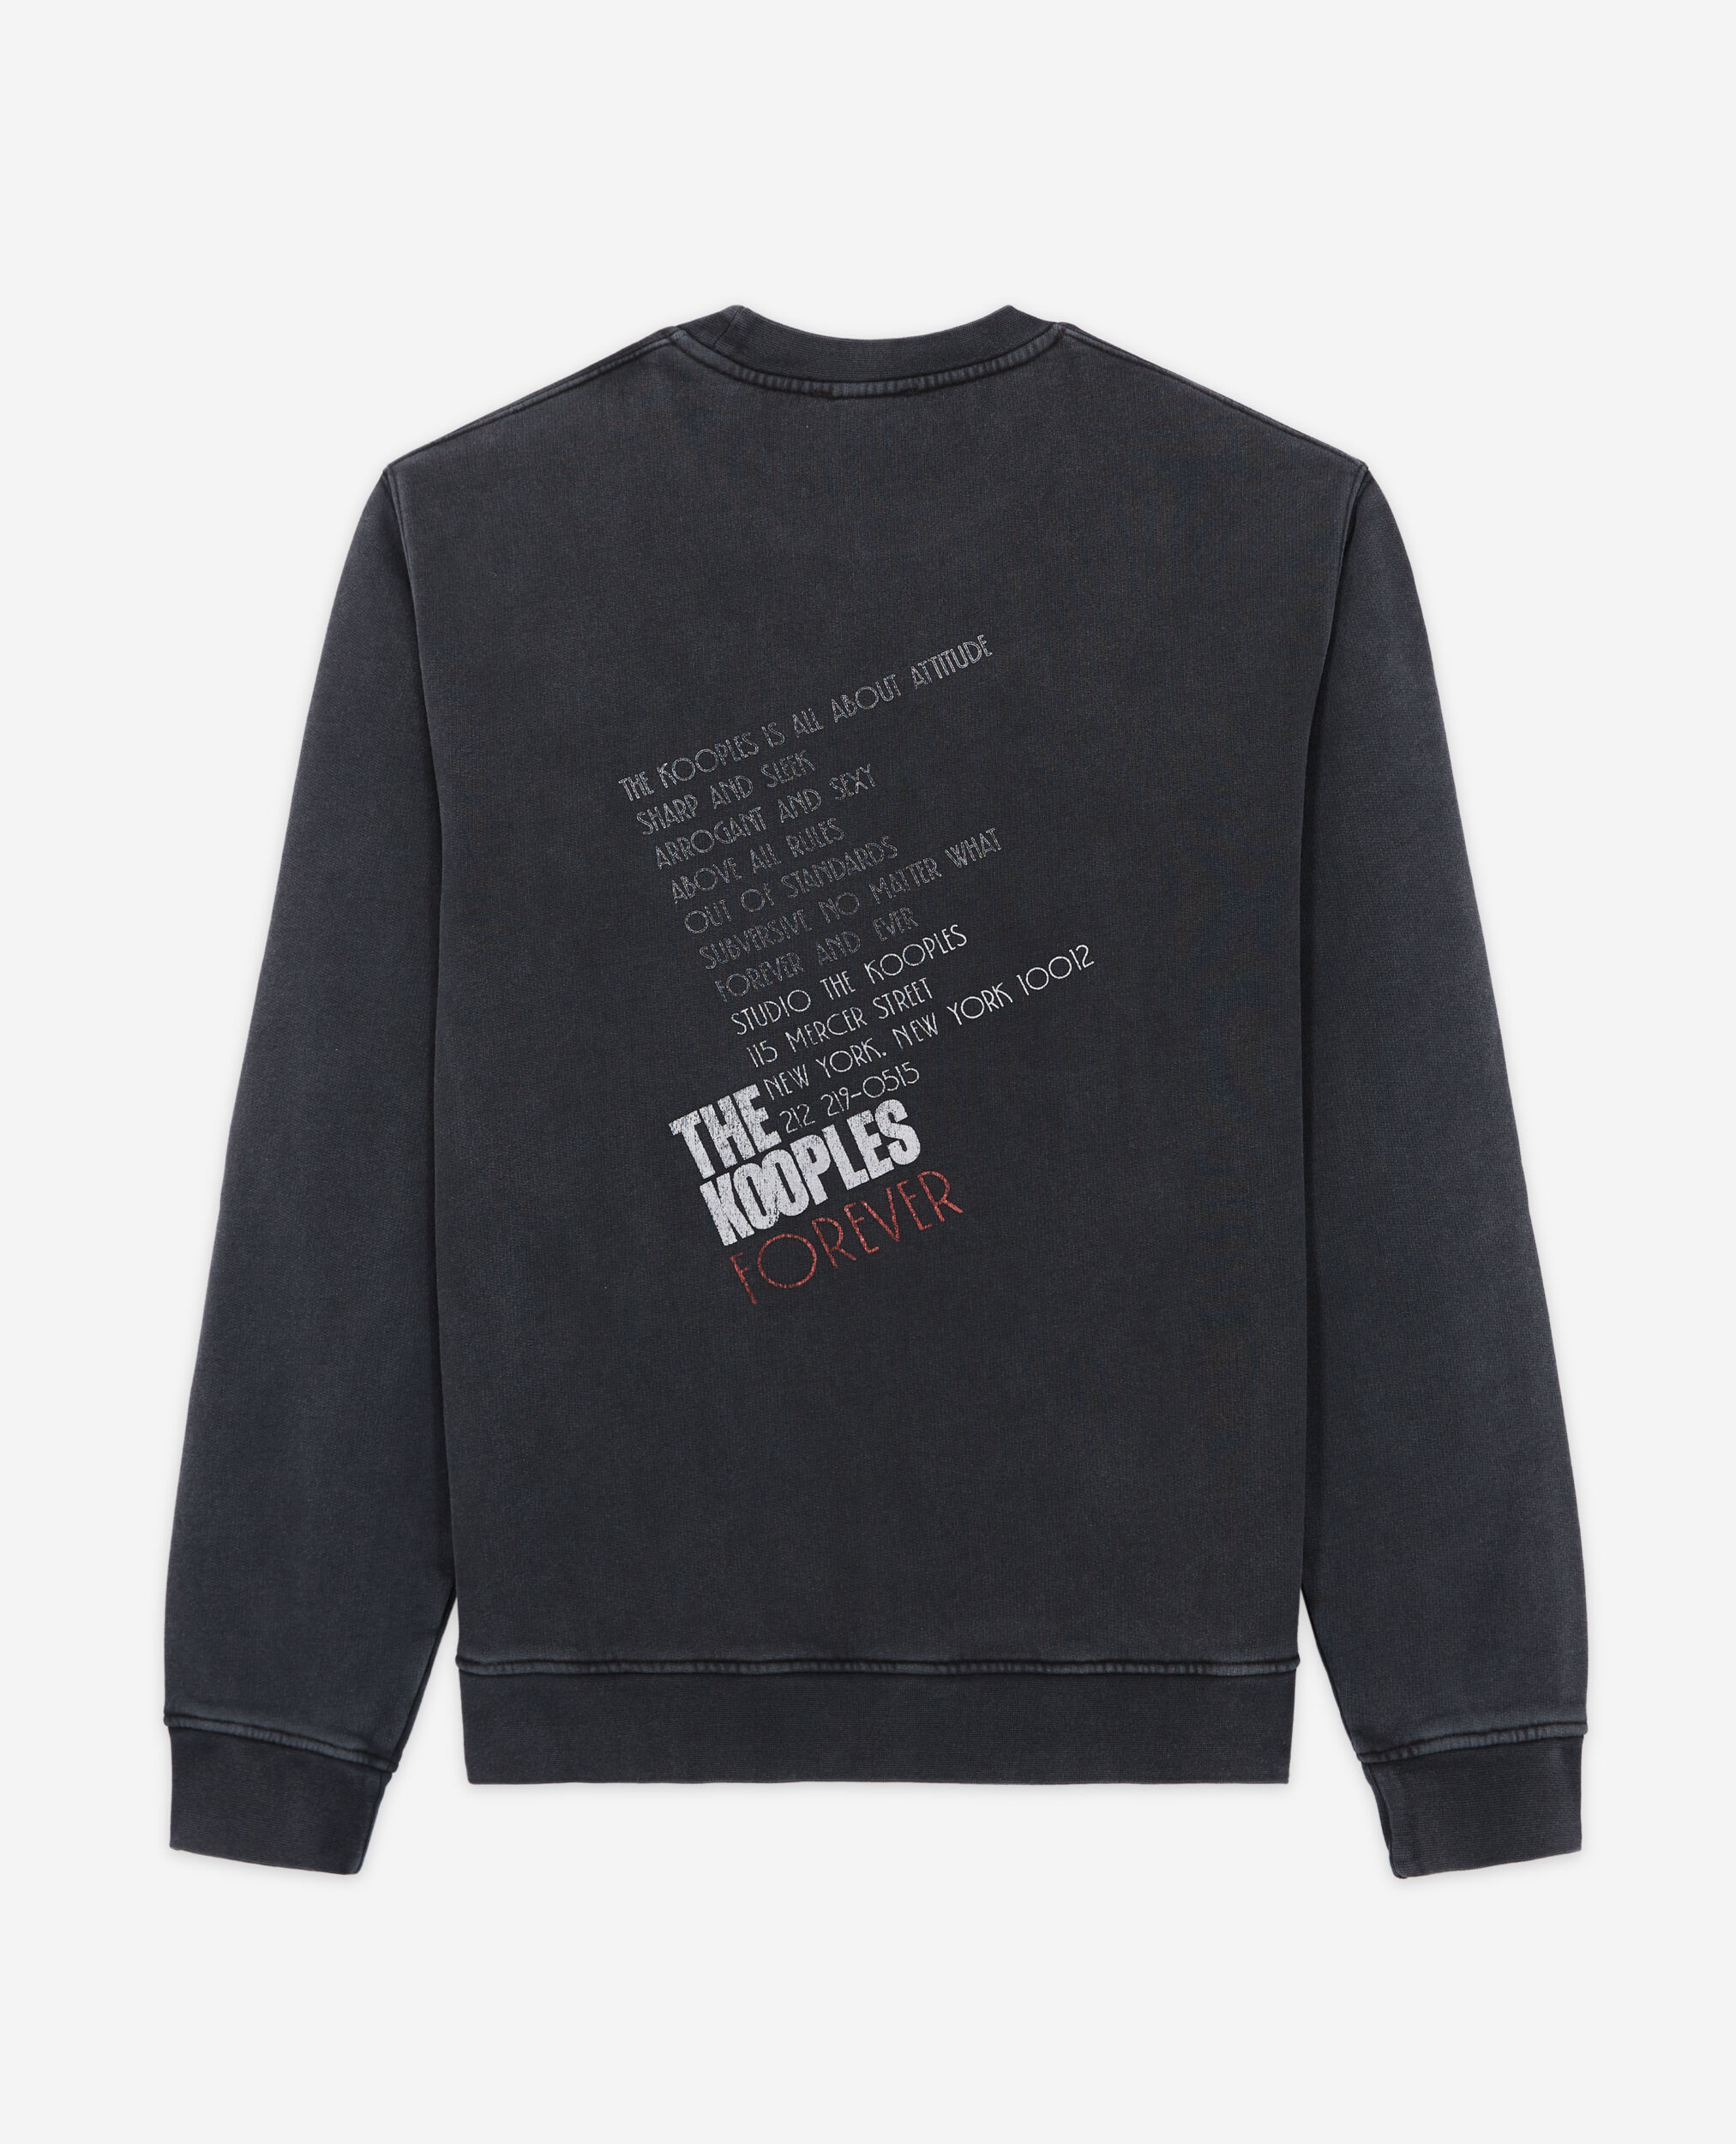 Black sweatshirt with tiger screen print, BLACK WASHED, hi-res image number null